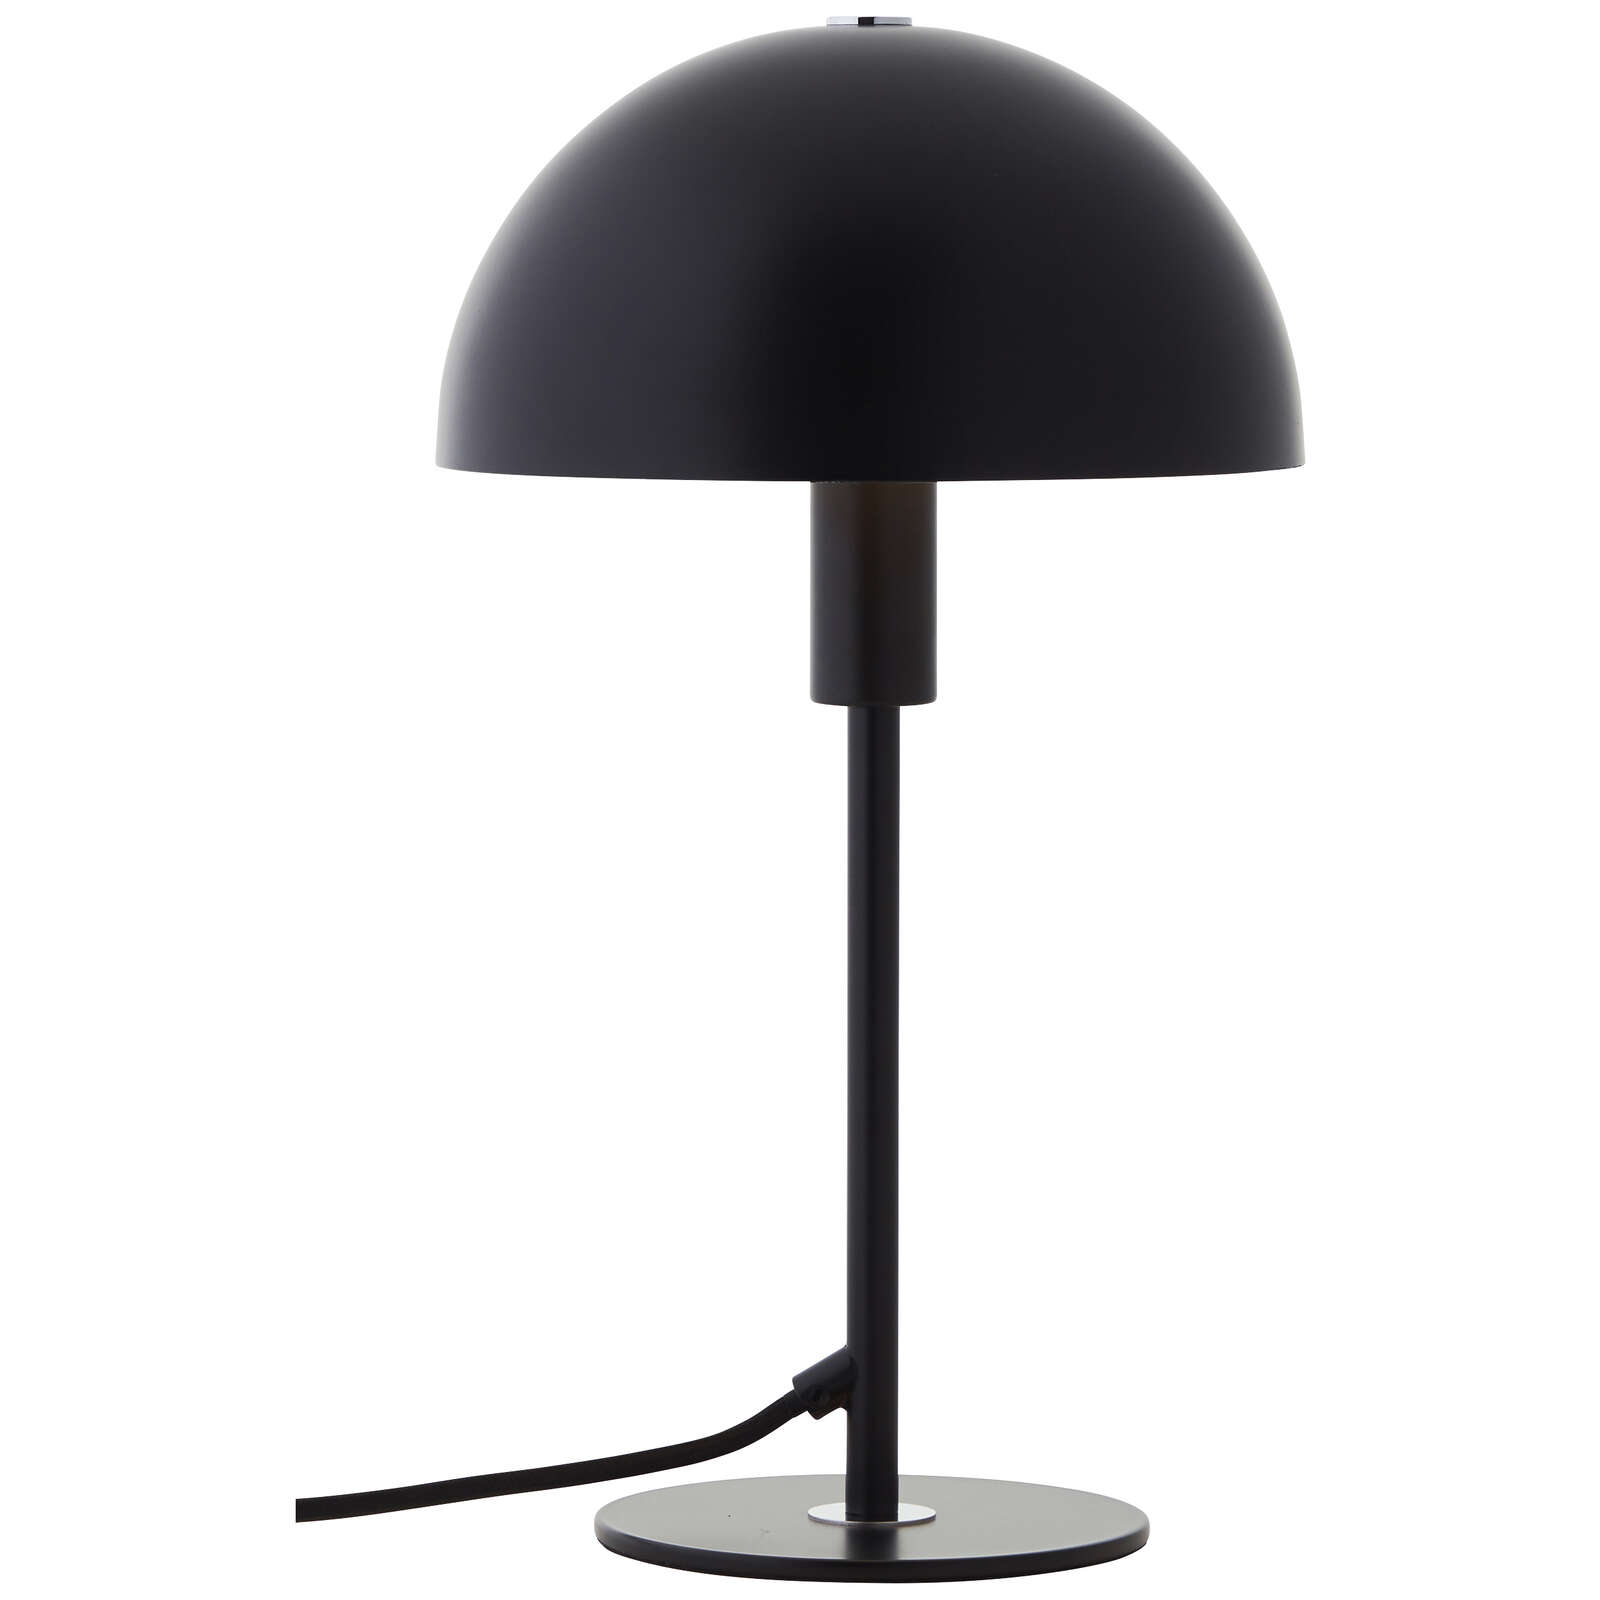             Lámpara de mesa de metal - Lasse 4 - Negro
        